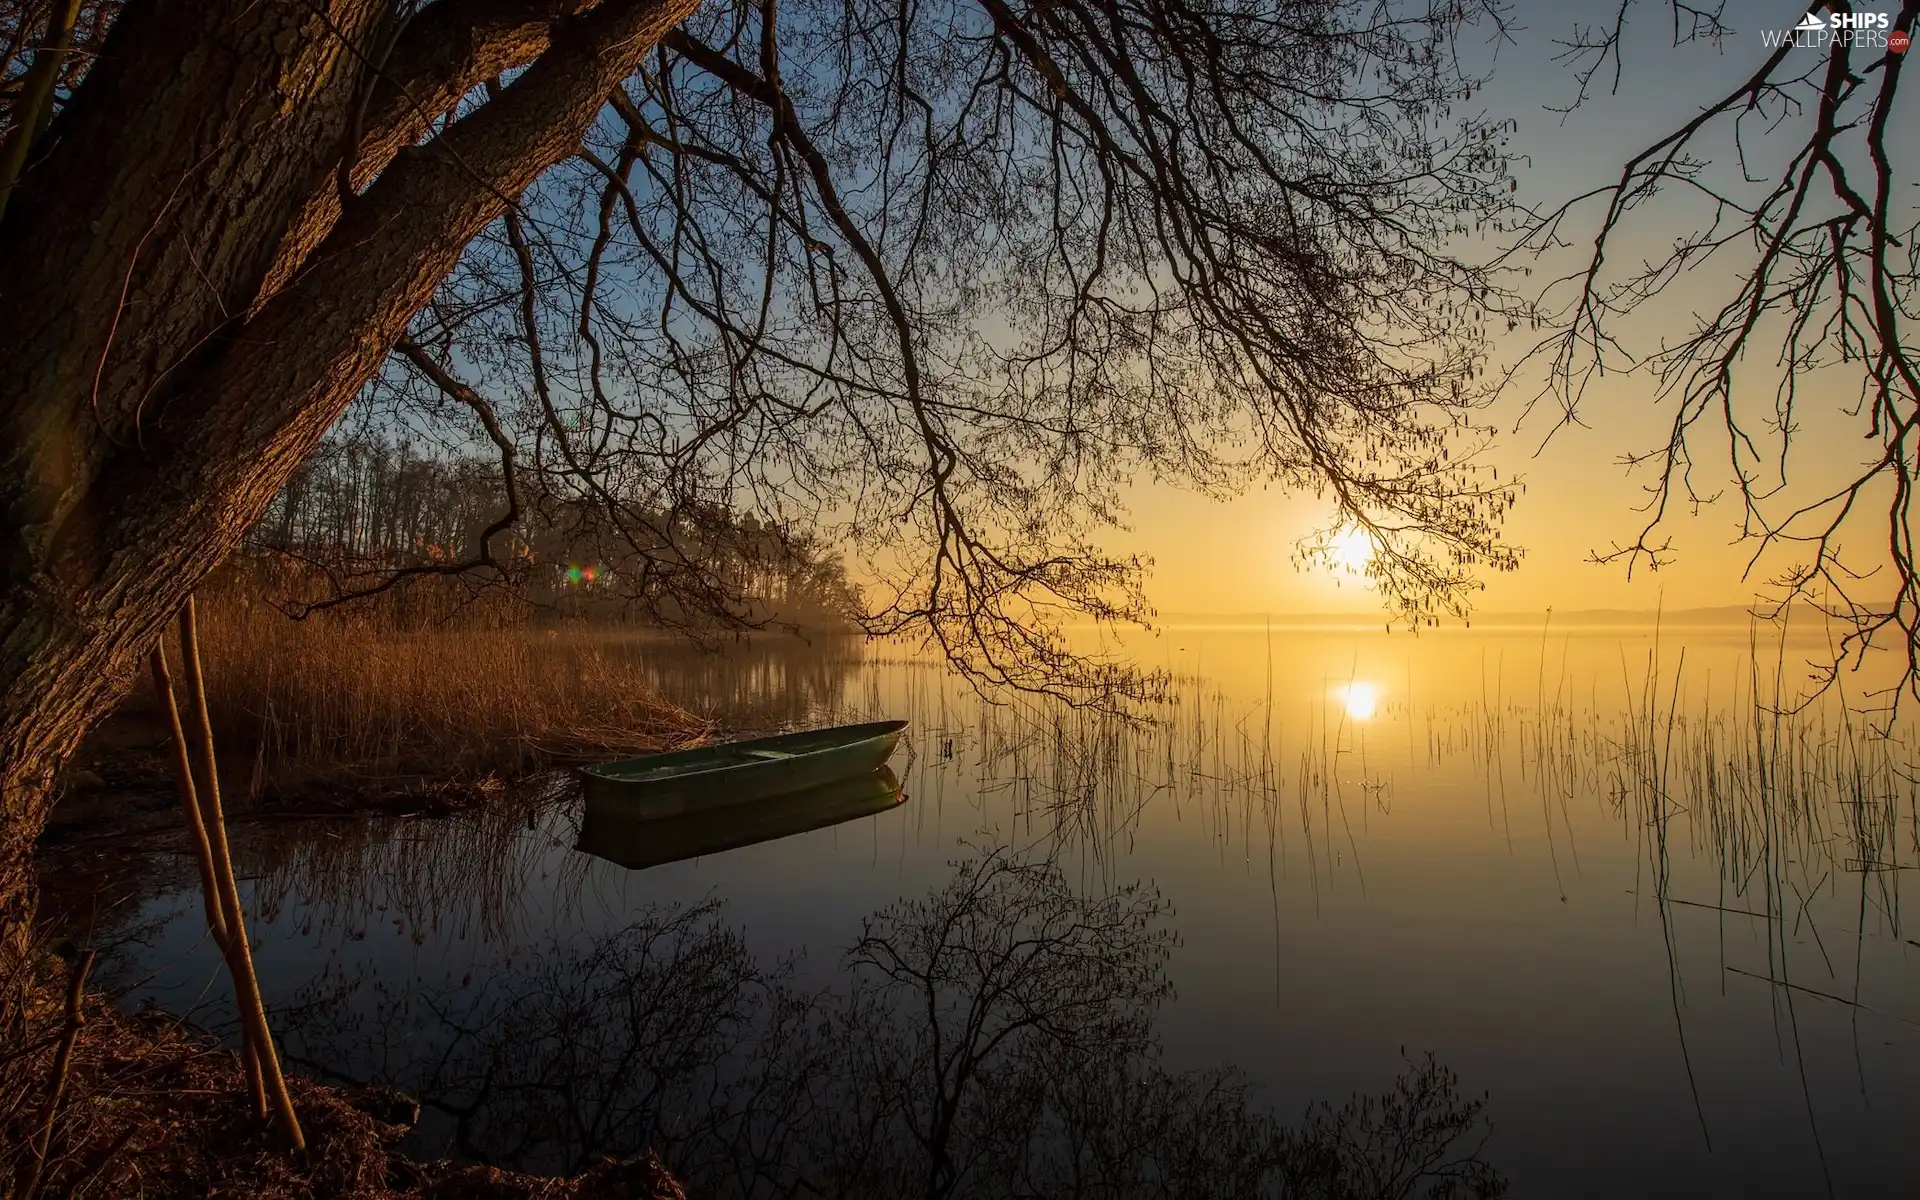 viewes, Sunrise, Boat, trees, lake, rushes, reflection